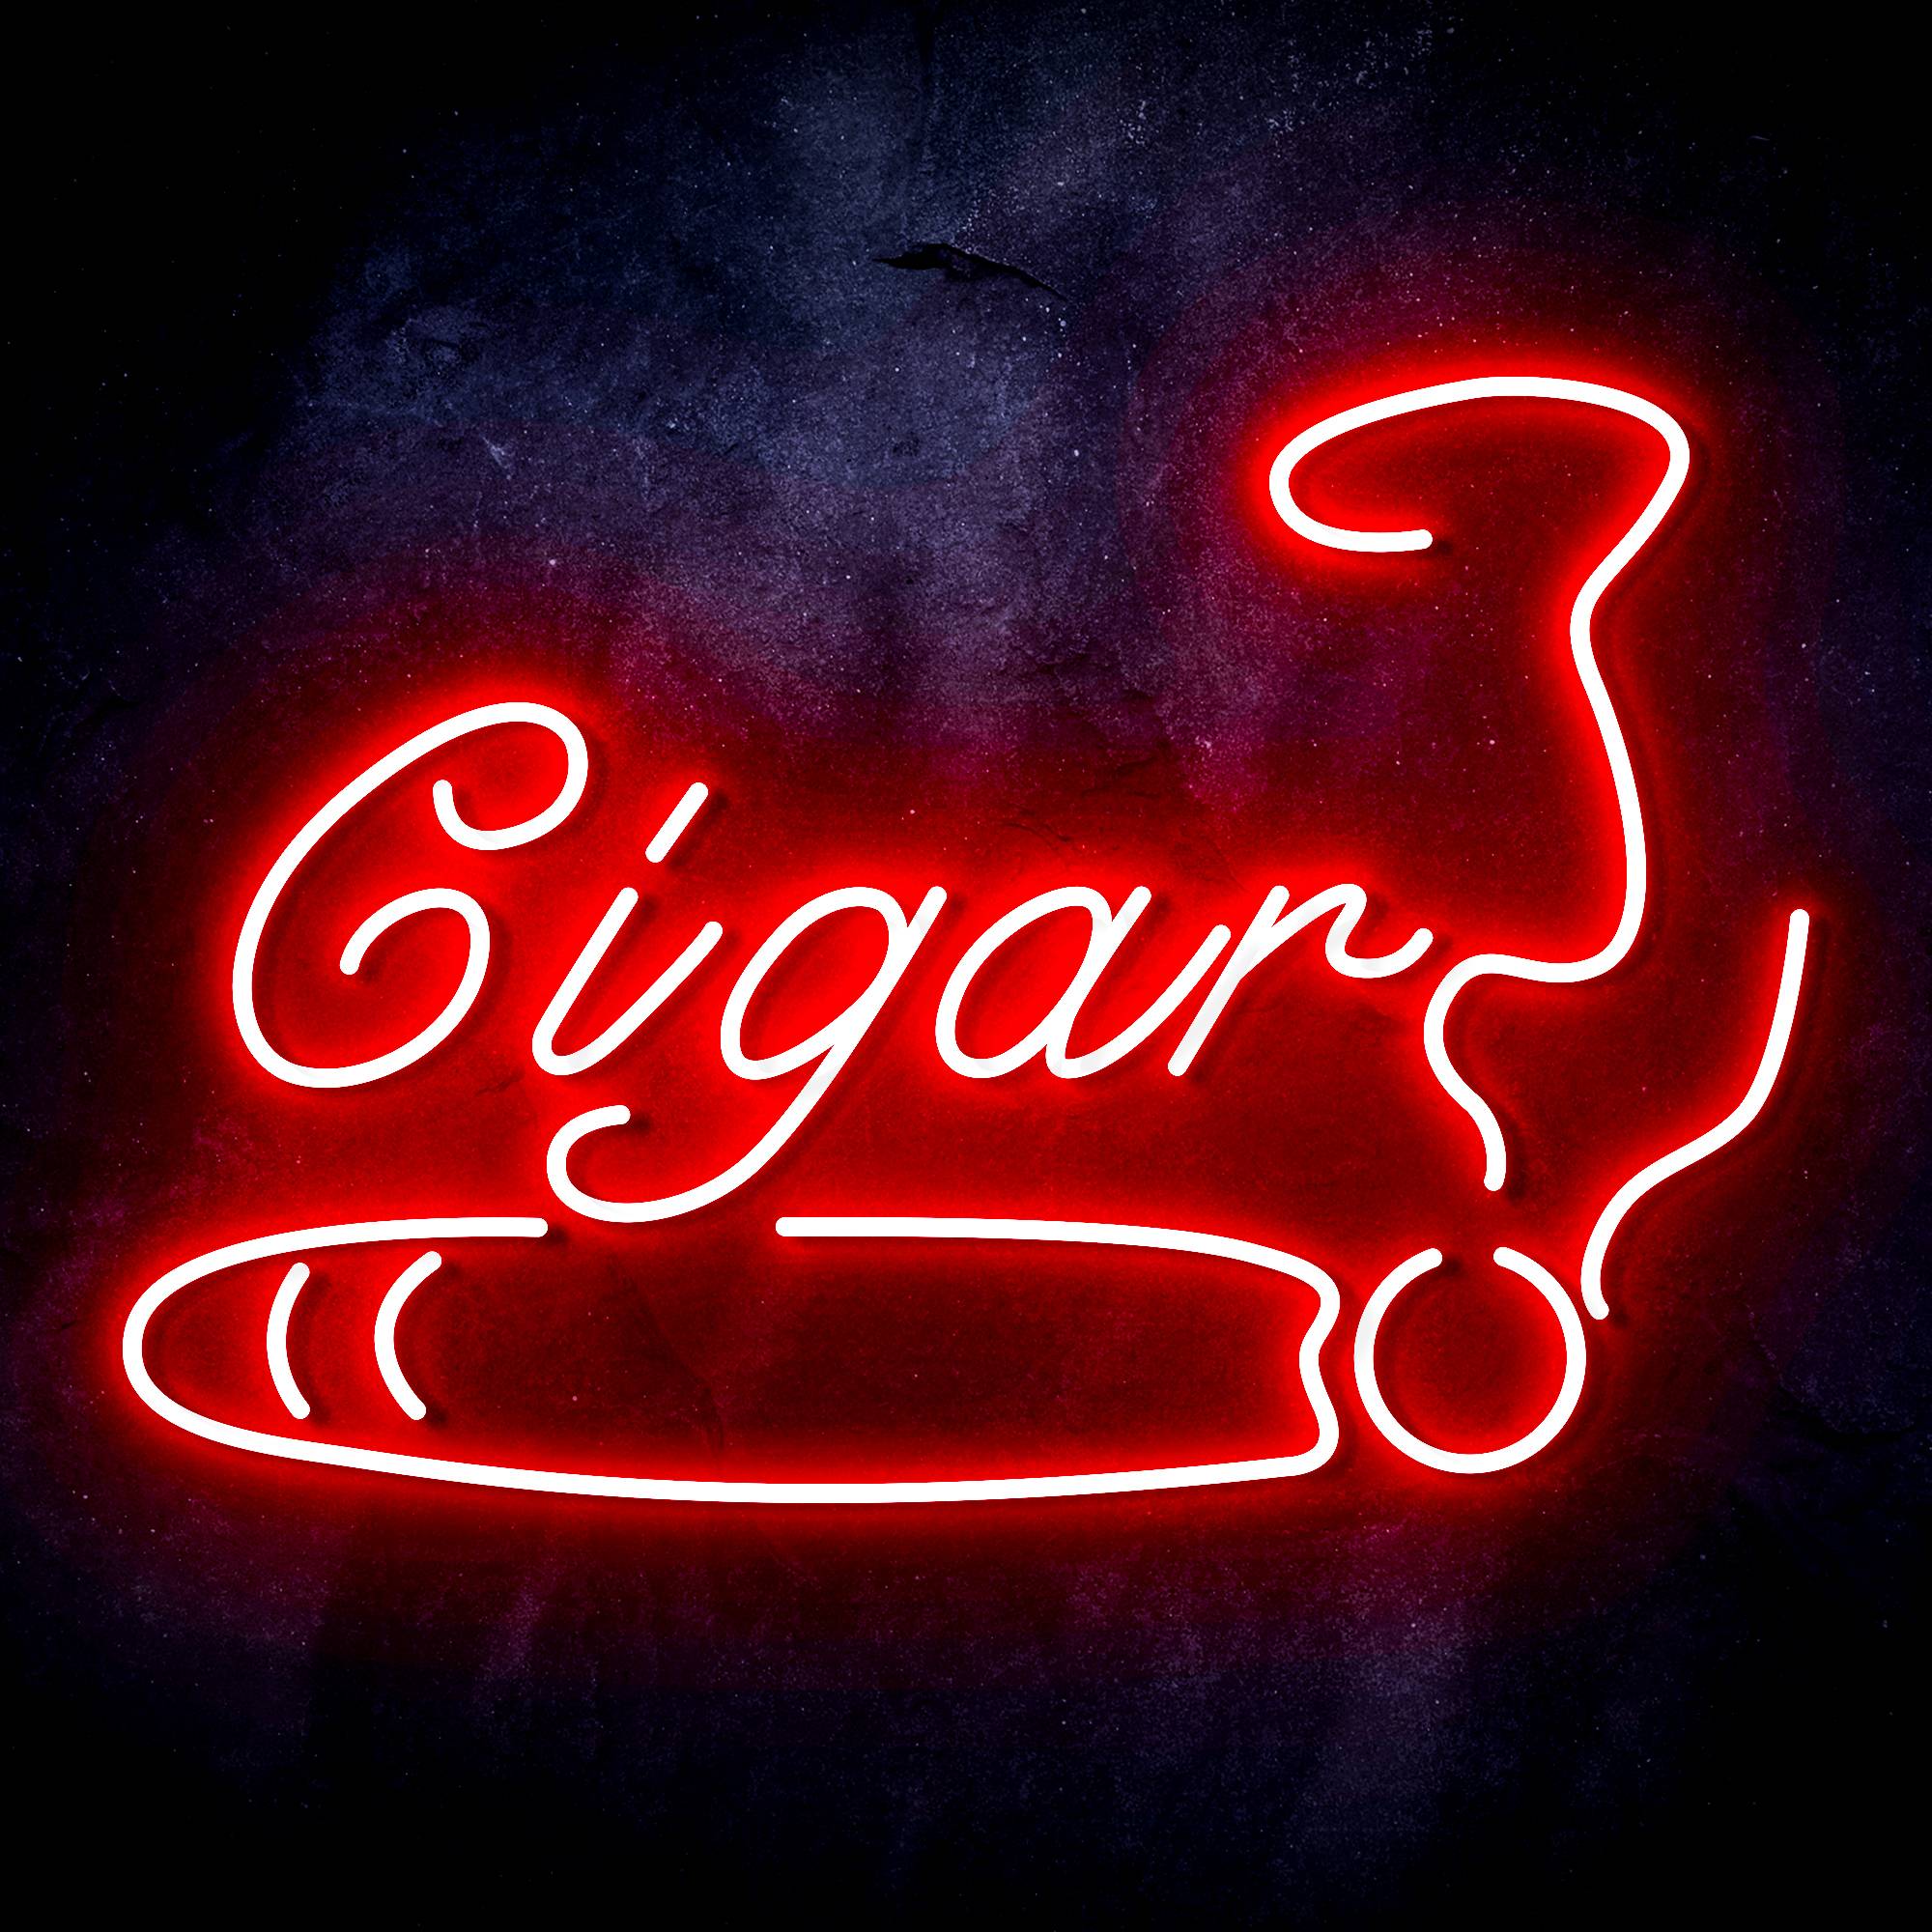 Cigarette Ciga Pipes LED Neon Sign